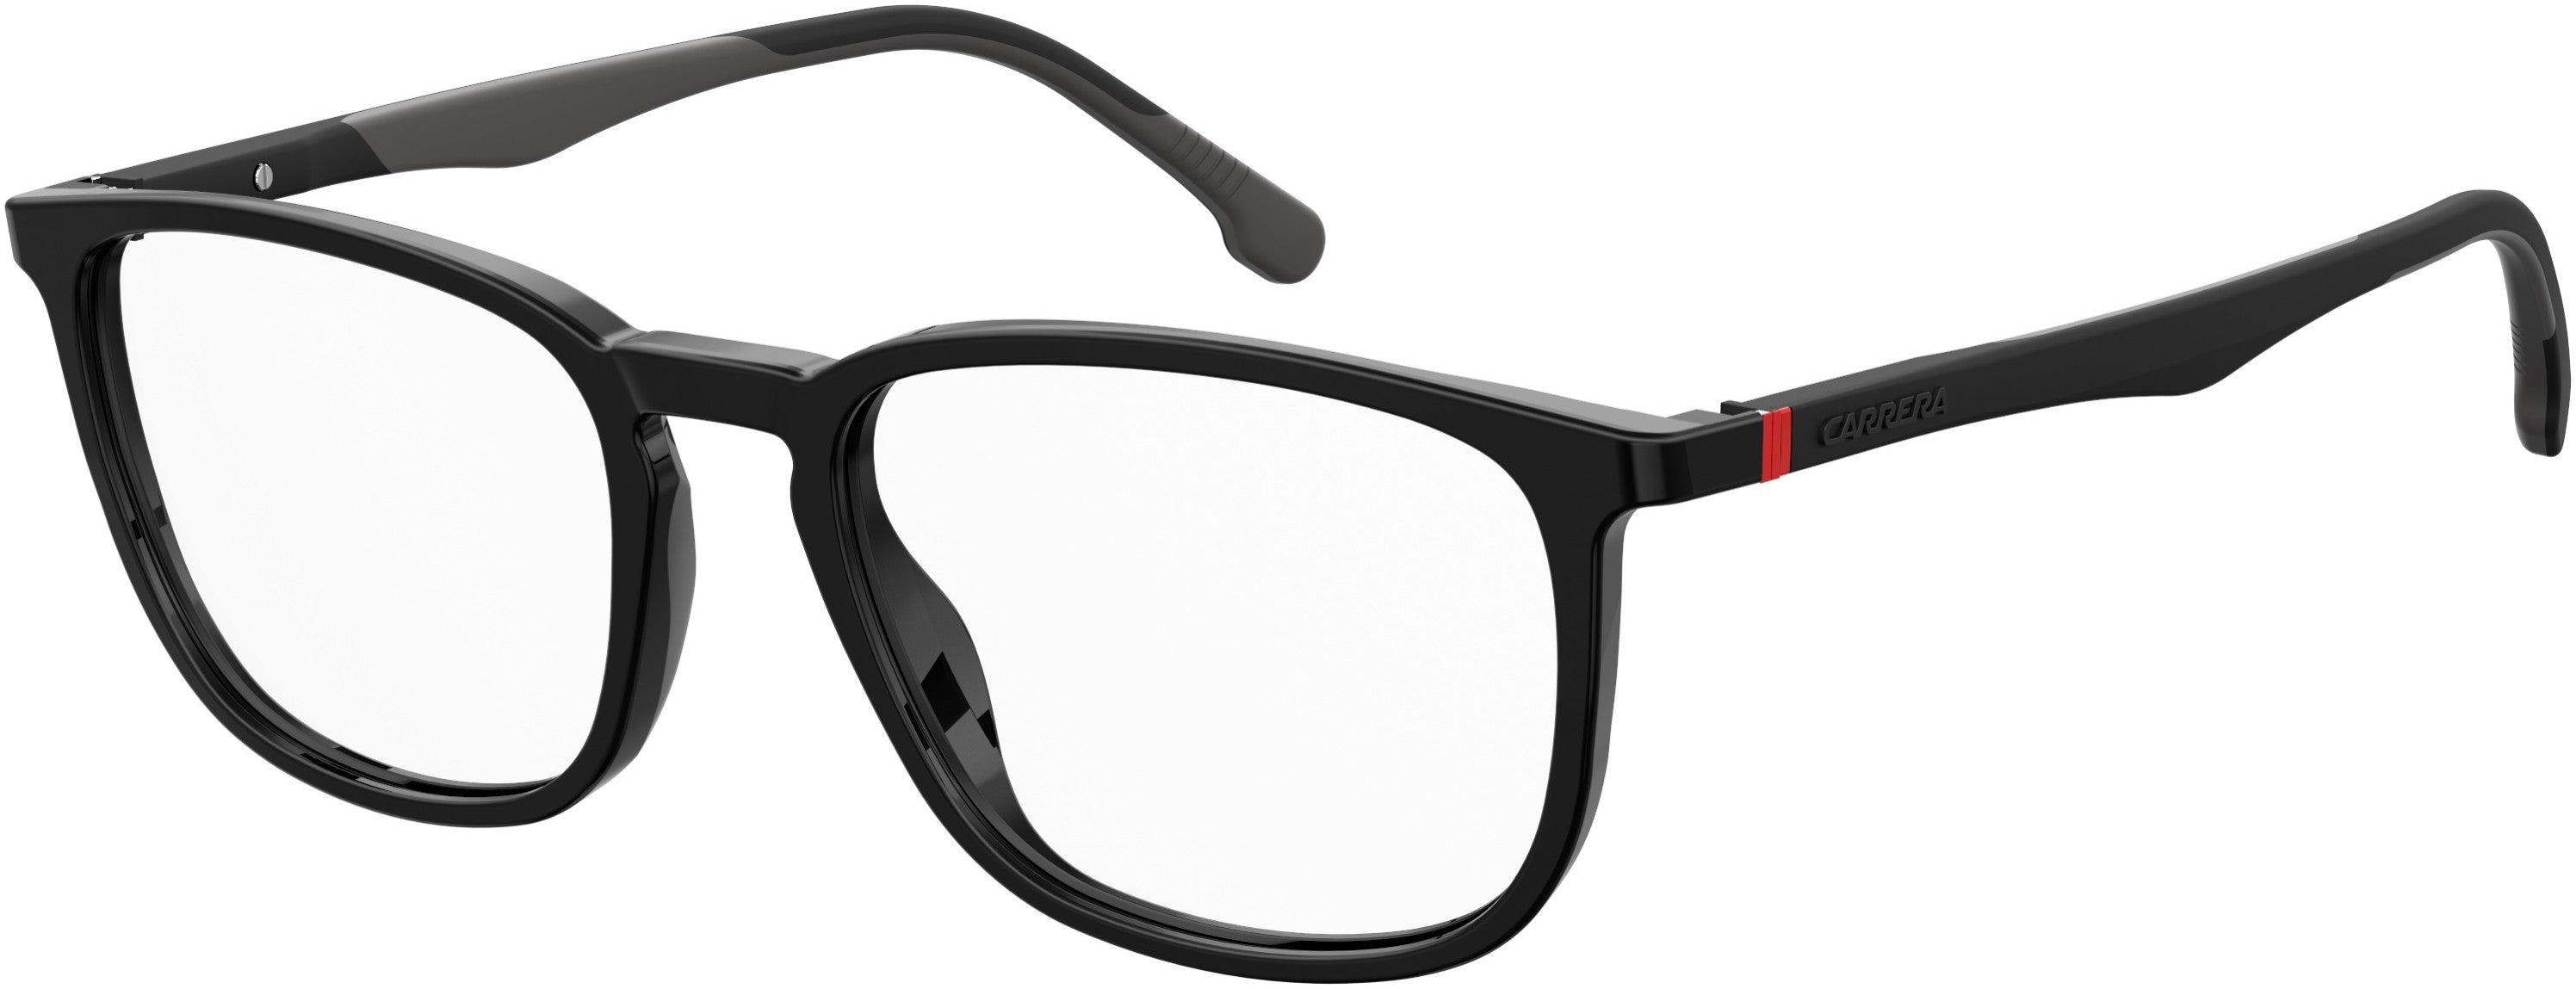  Carrera 8844 Rectangular Eyeglasses 0807-0807  Black (00 Demo Lens)